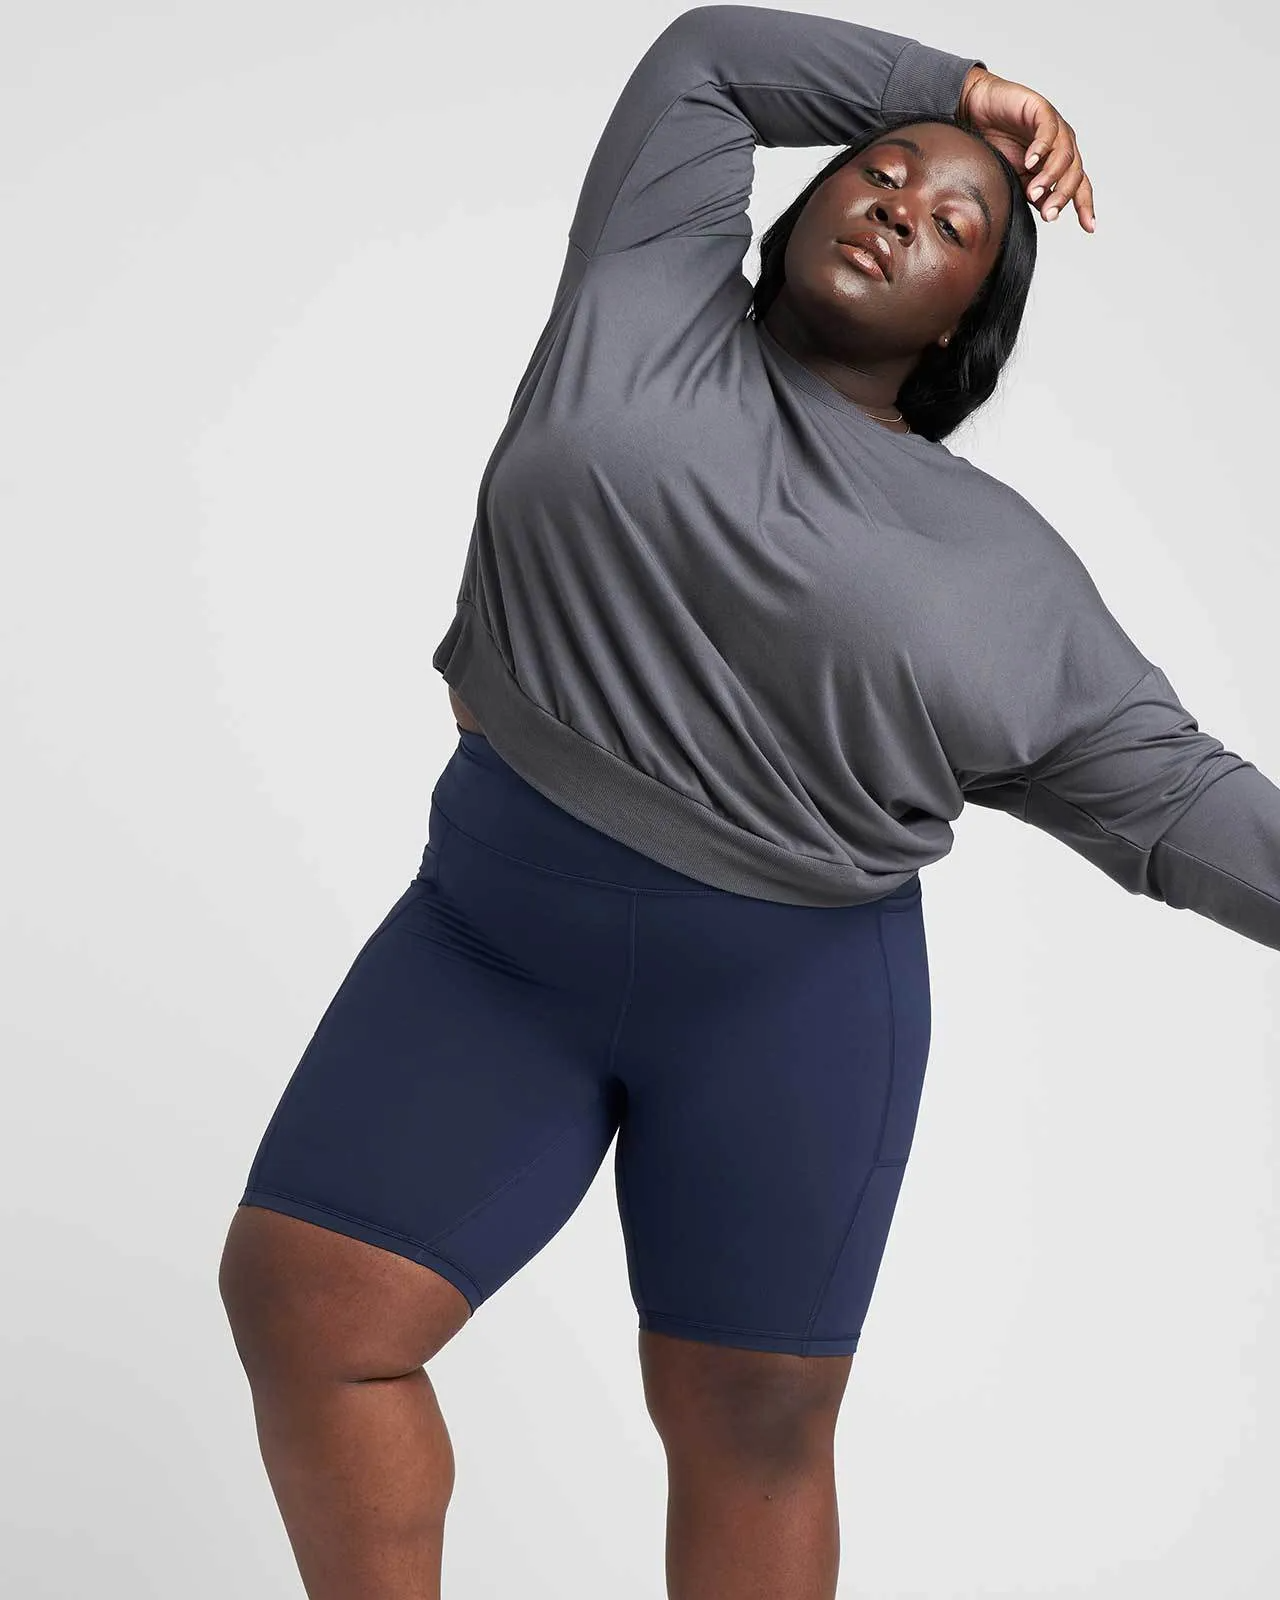 32 Best Plus Size Workout Clothes of 2022 - Plus-Size Activewear